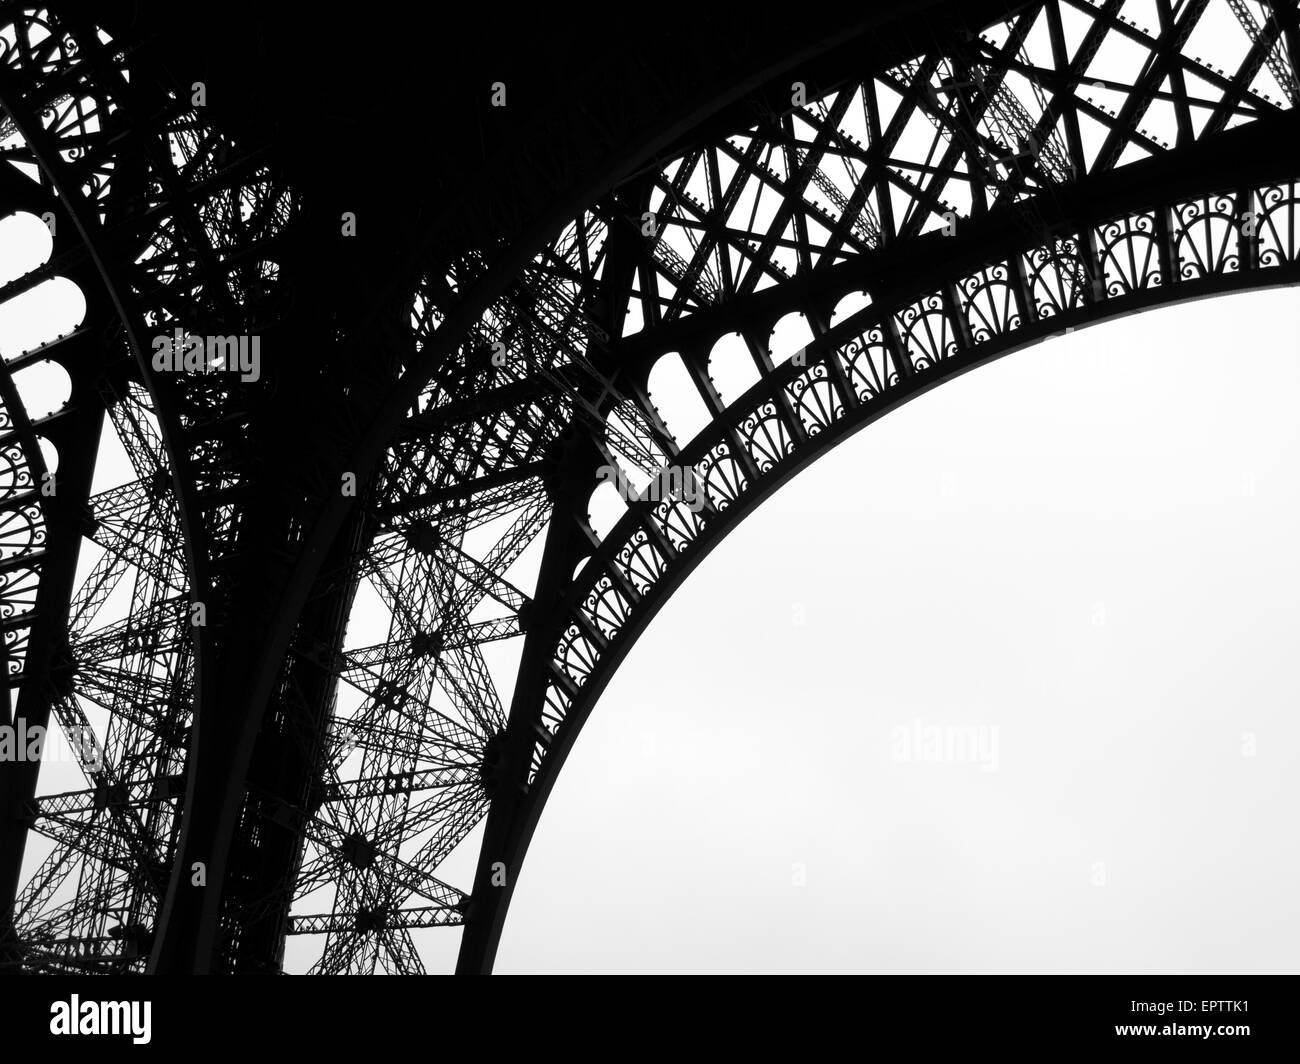 Low angle view of Eiffel Tower, Paris, France Banque D'Images